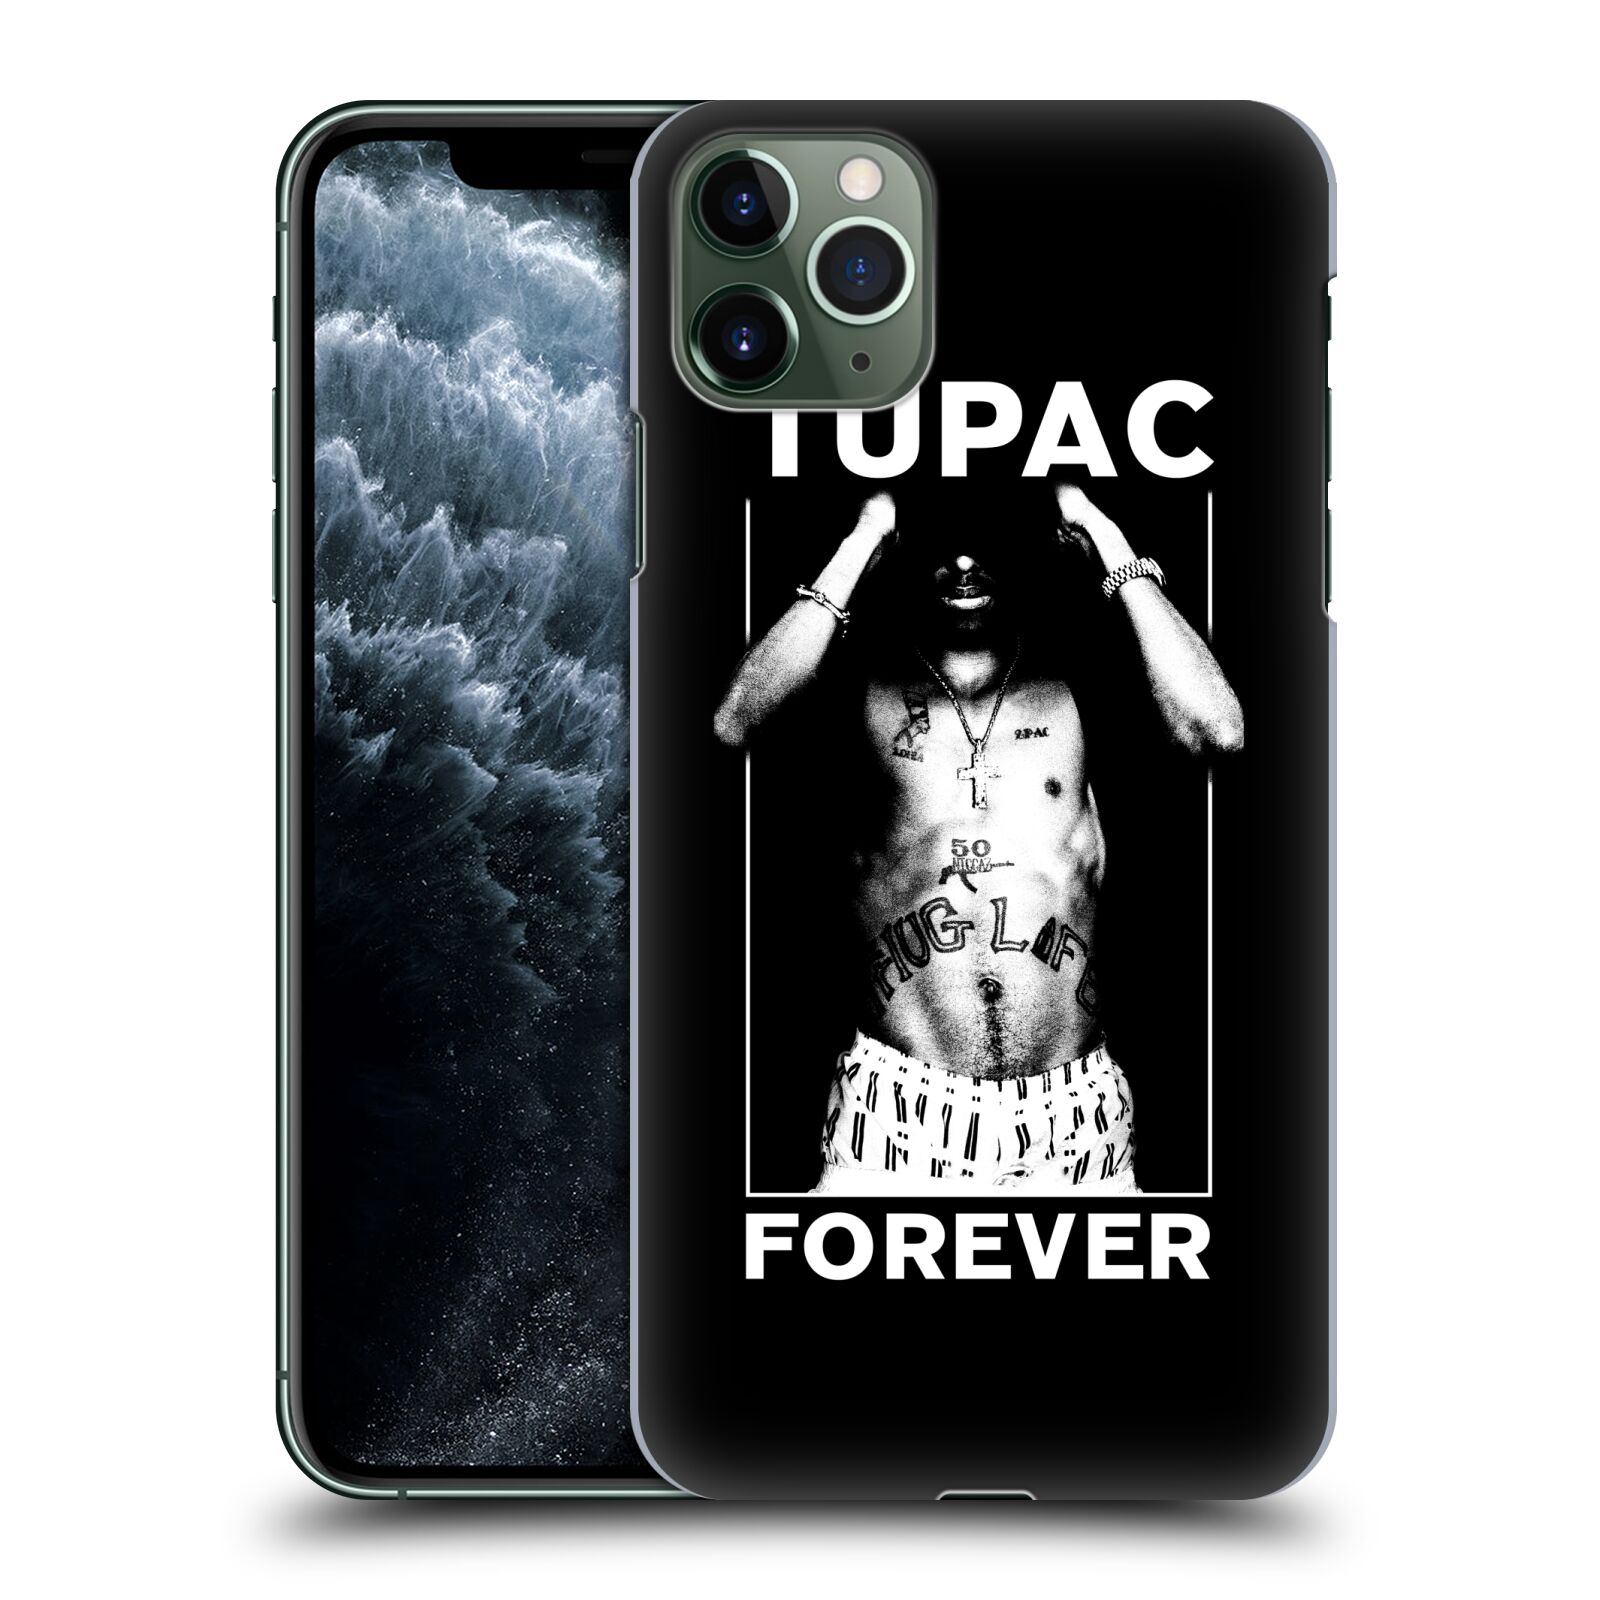 Pouzdro na mobil Apple Iphone 11 PRO MAX - HEAD CASE - Zpěvák rapper Tupac Shakur 2Pac bílý popisek FOREVER